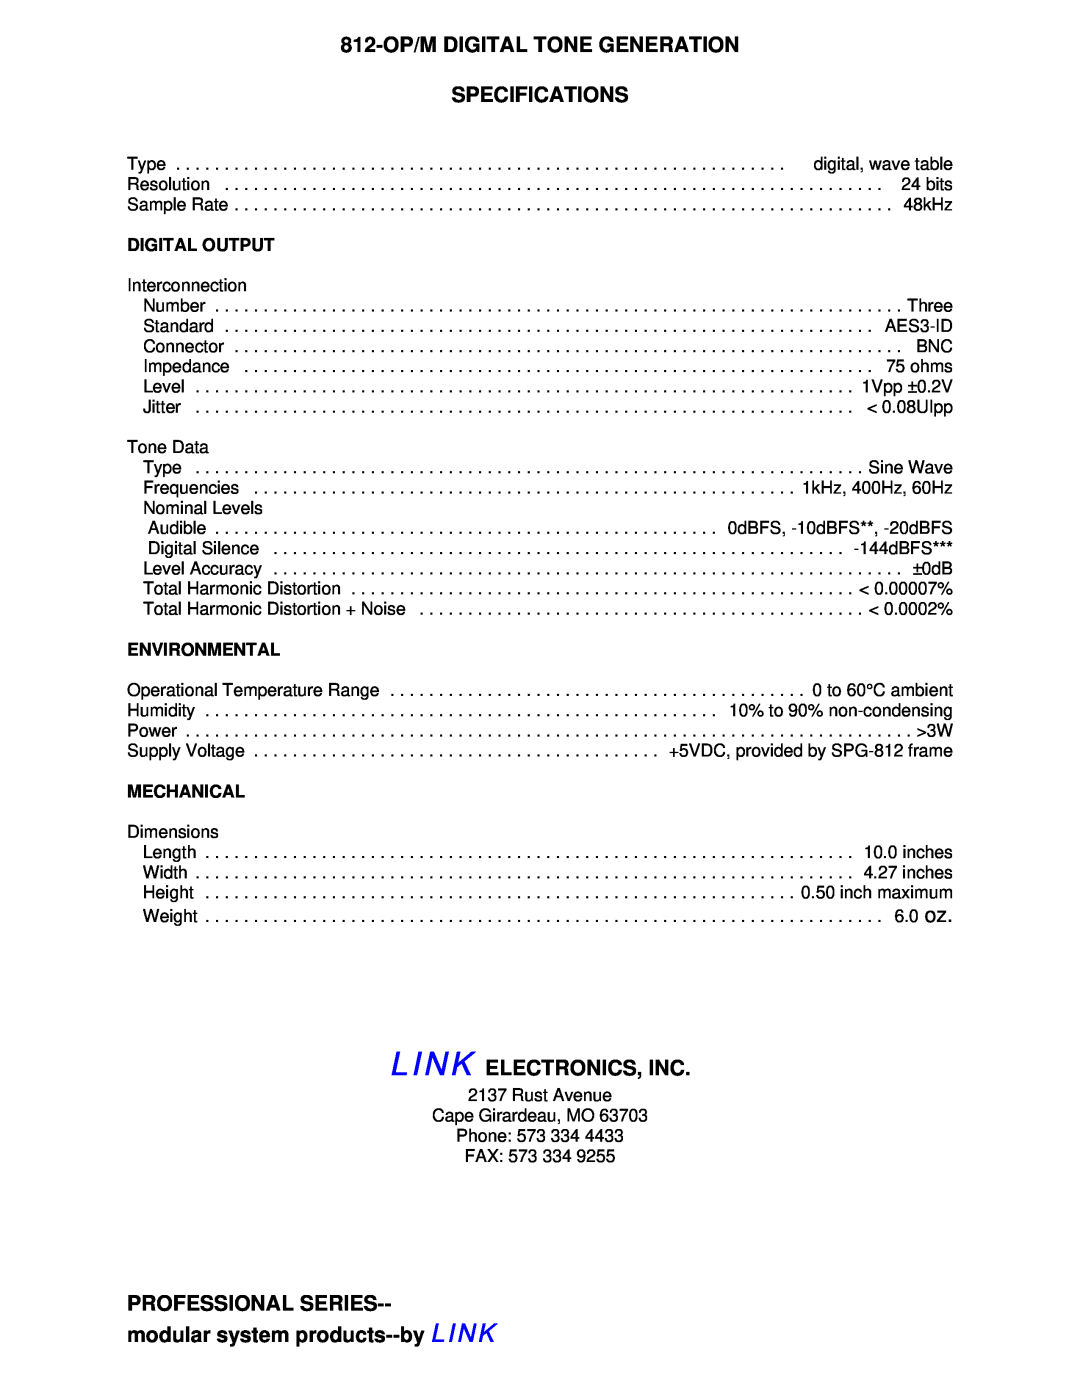 Link electronic 812-OP/M DIGITAL TONE GENERATION SPECIFICATIONS, Link Electronics, Inc, Digital Output, Environmental 